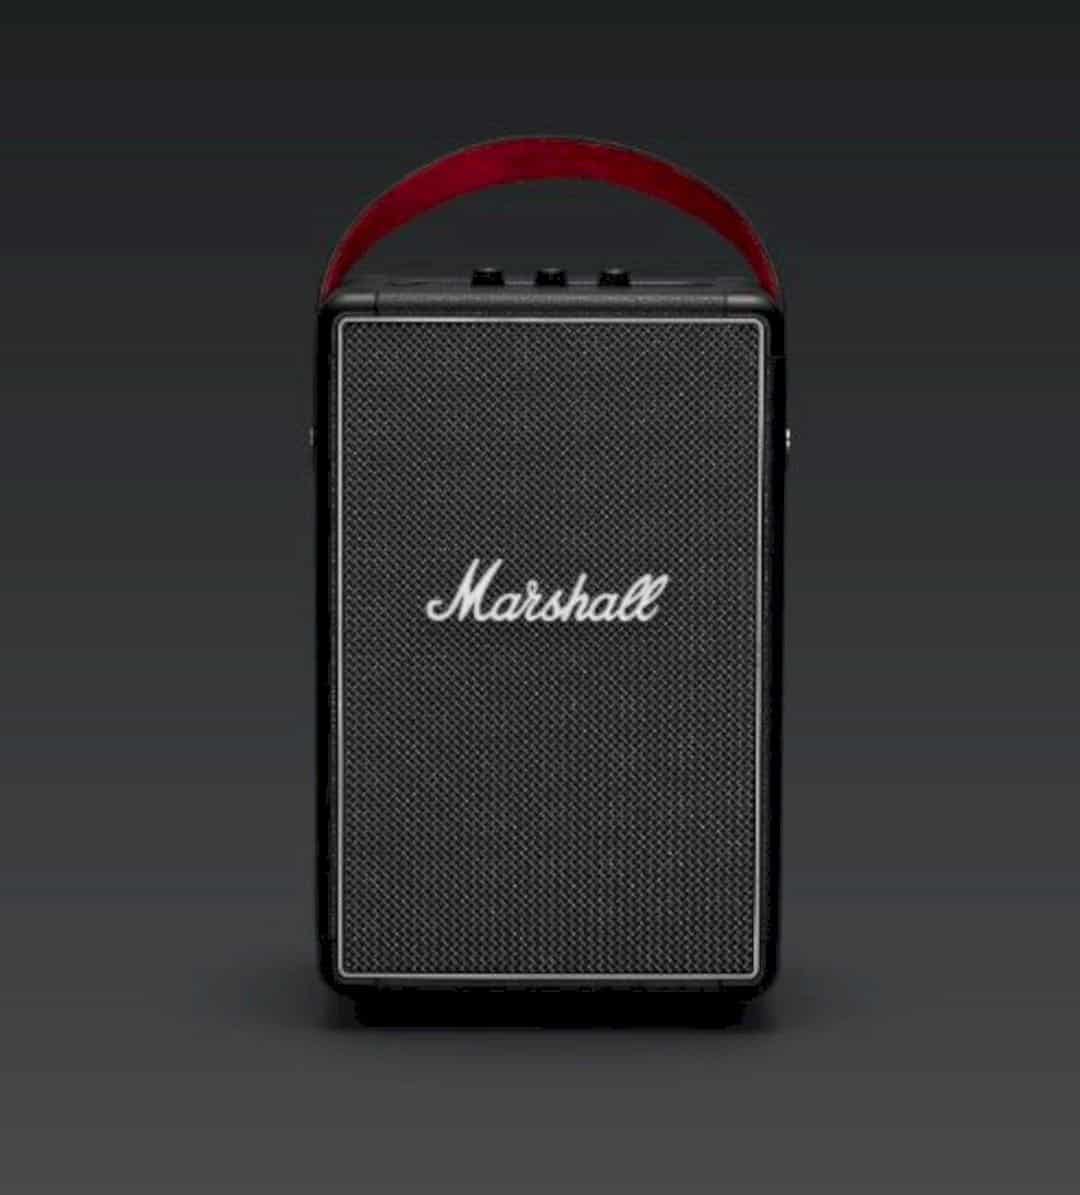 Tufton Marshall Portable Speaker 9